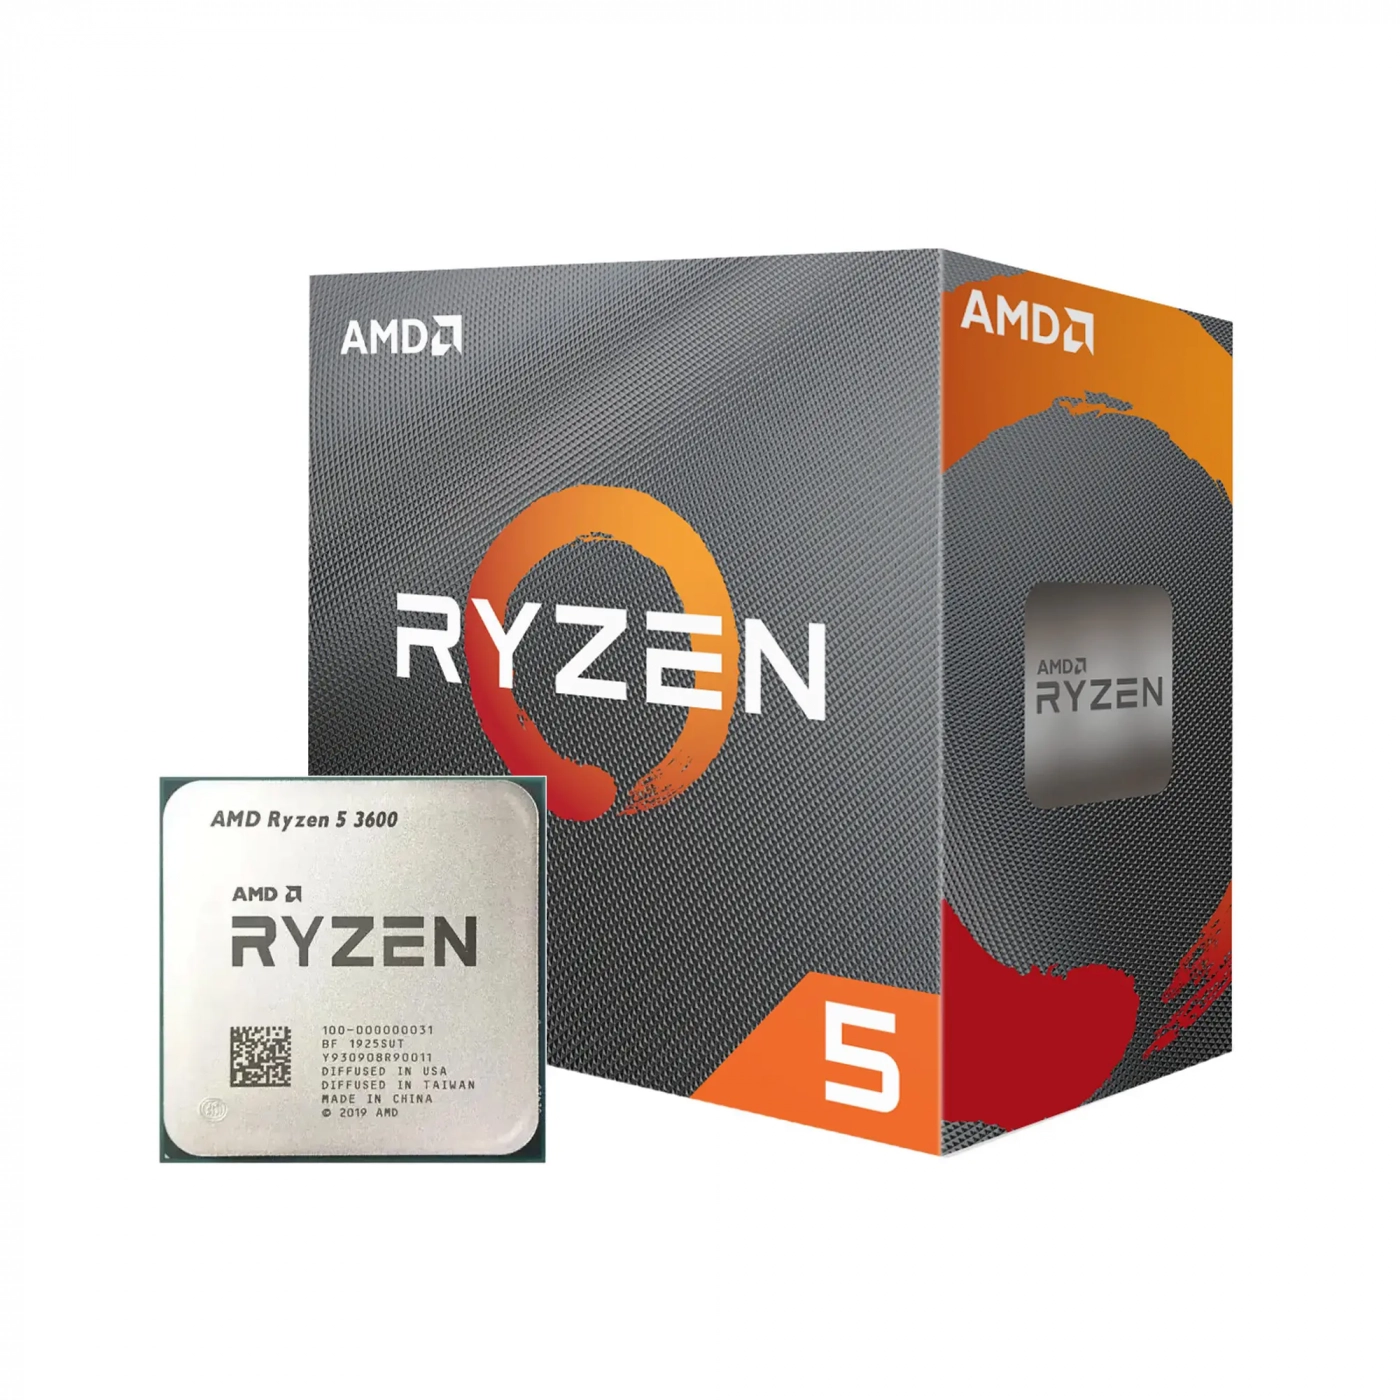 Купити Процесор AMD Ryzen 5 3600 (4.2GHz, 6C/12T, 36MB,65W,AM4,Wraith Stealth cooler) BOX - фото 1